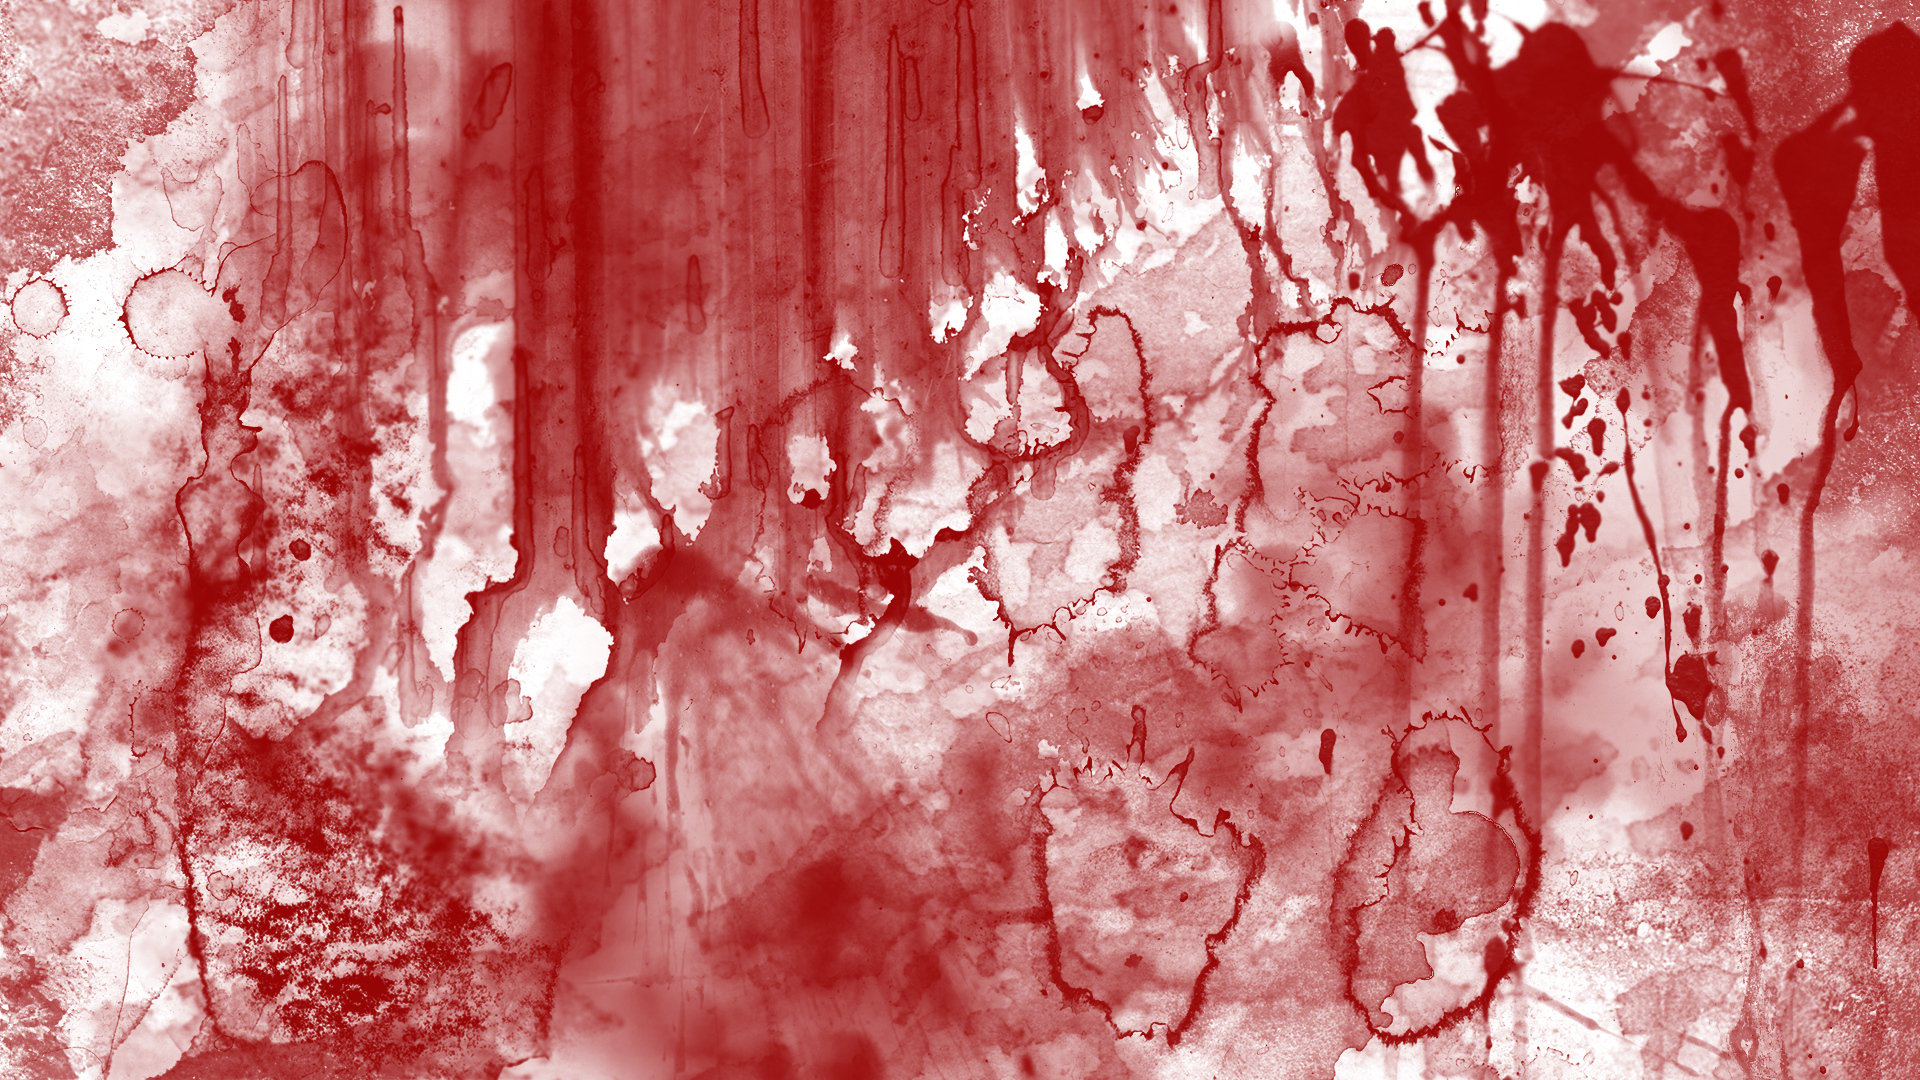 Blood Computer Wallpapers Desktop Backgrounds 1920x1080 ID306929 1920x1080